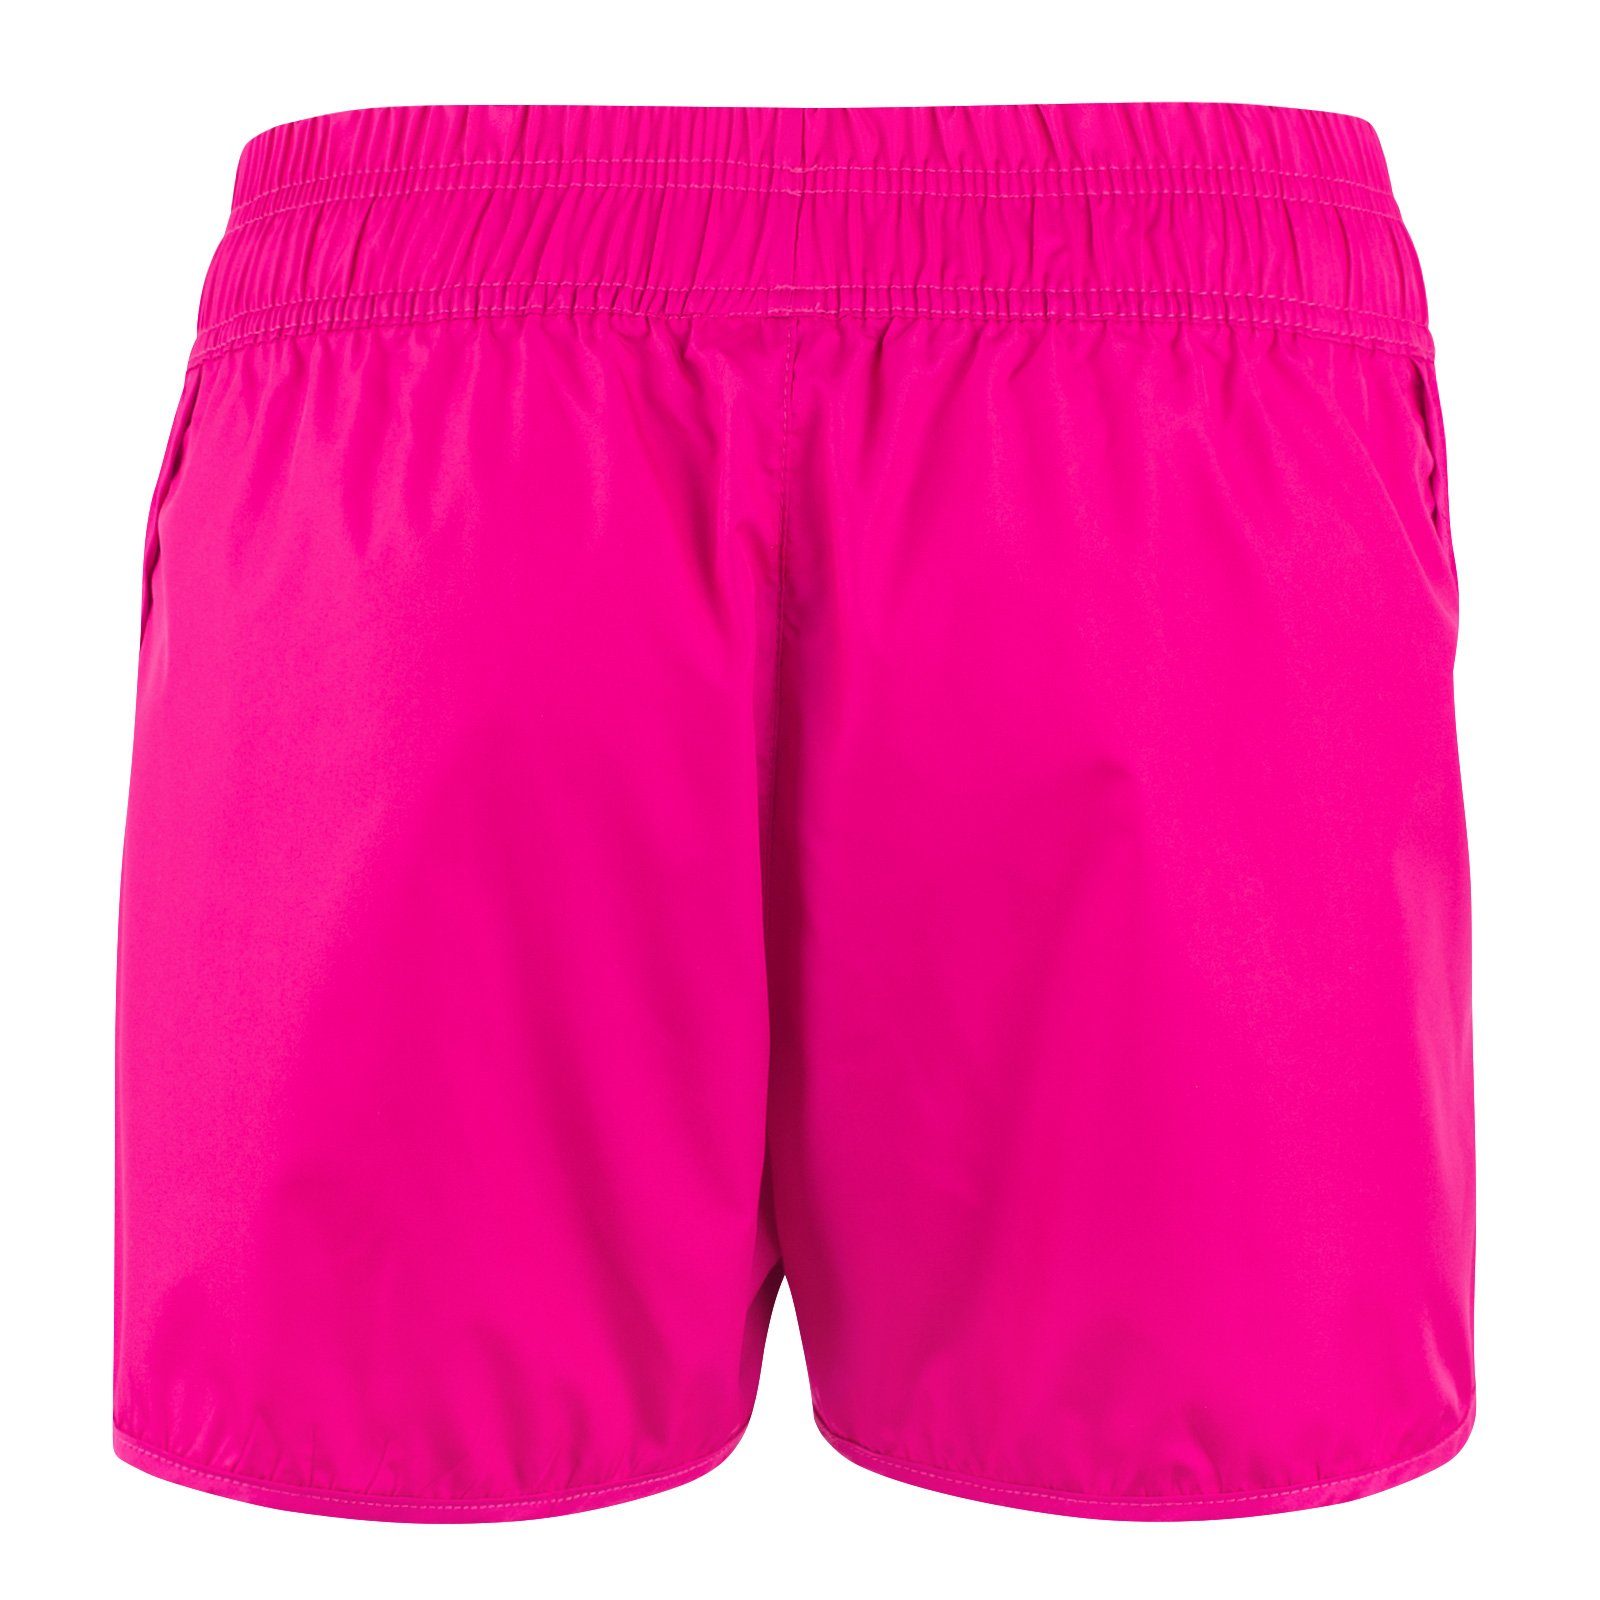 Stark Sport aus - Short Dry Soul® Material Quick - Sporthose Sporthose kurze Pink Schnelltrocknend